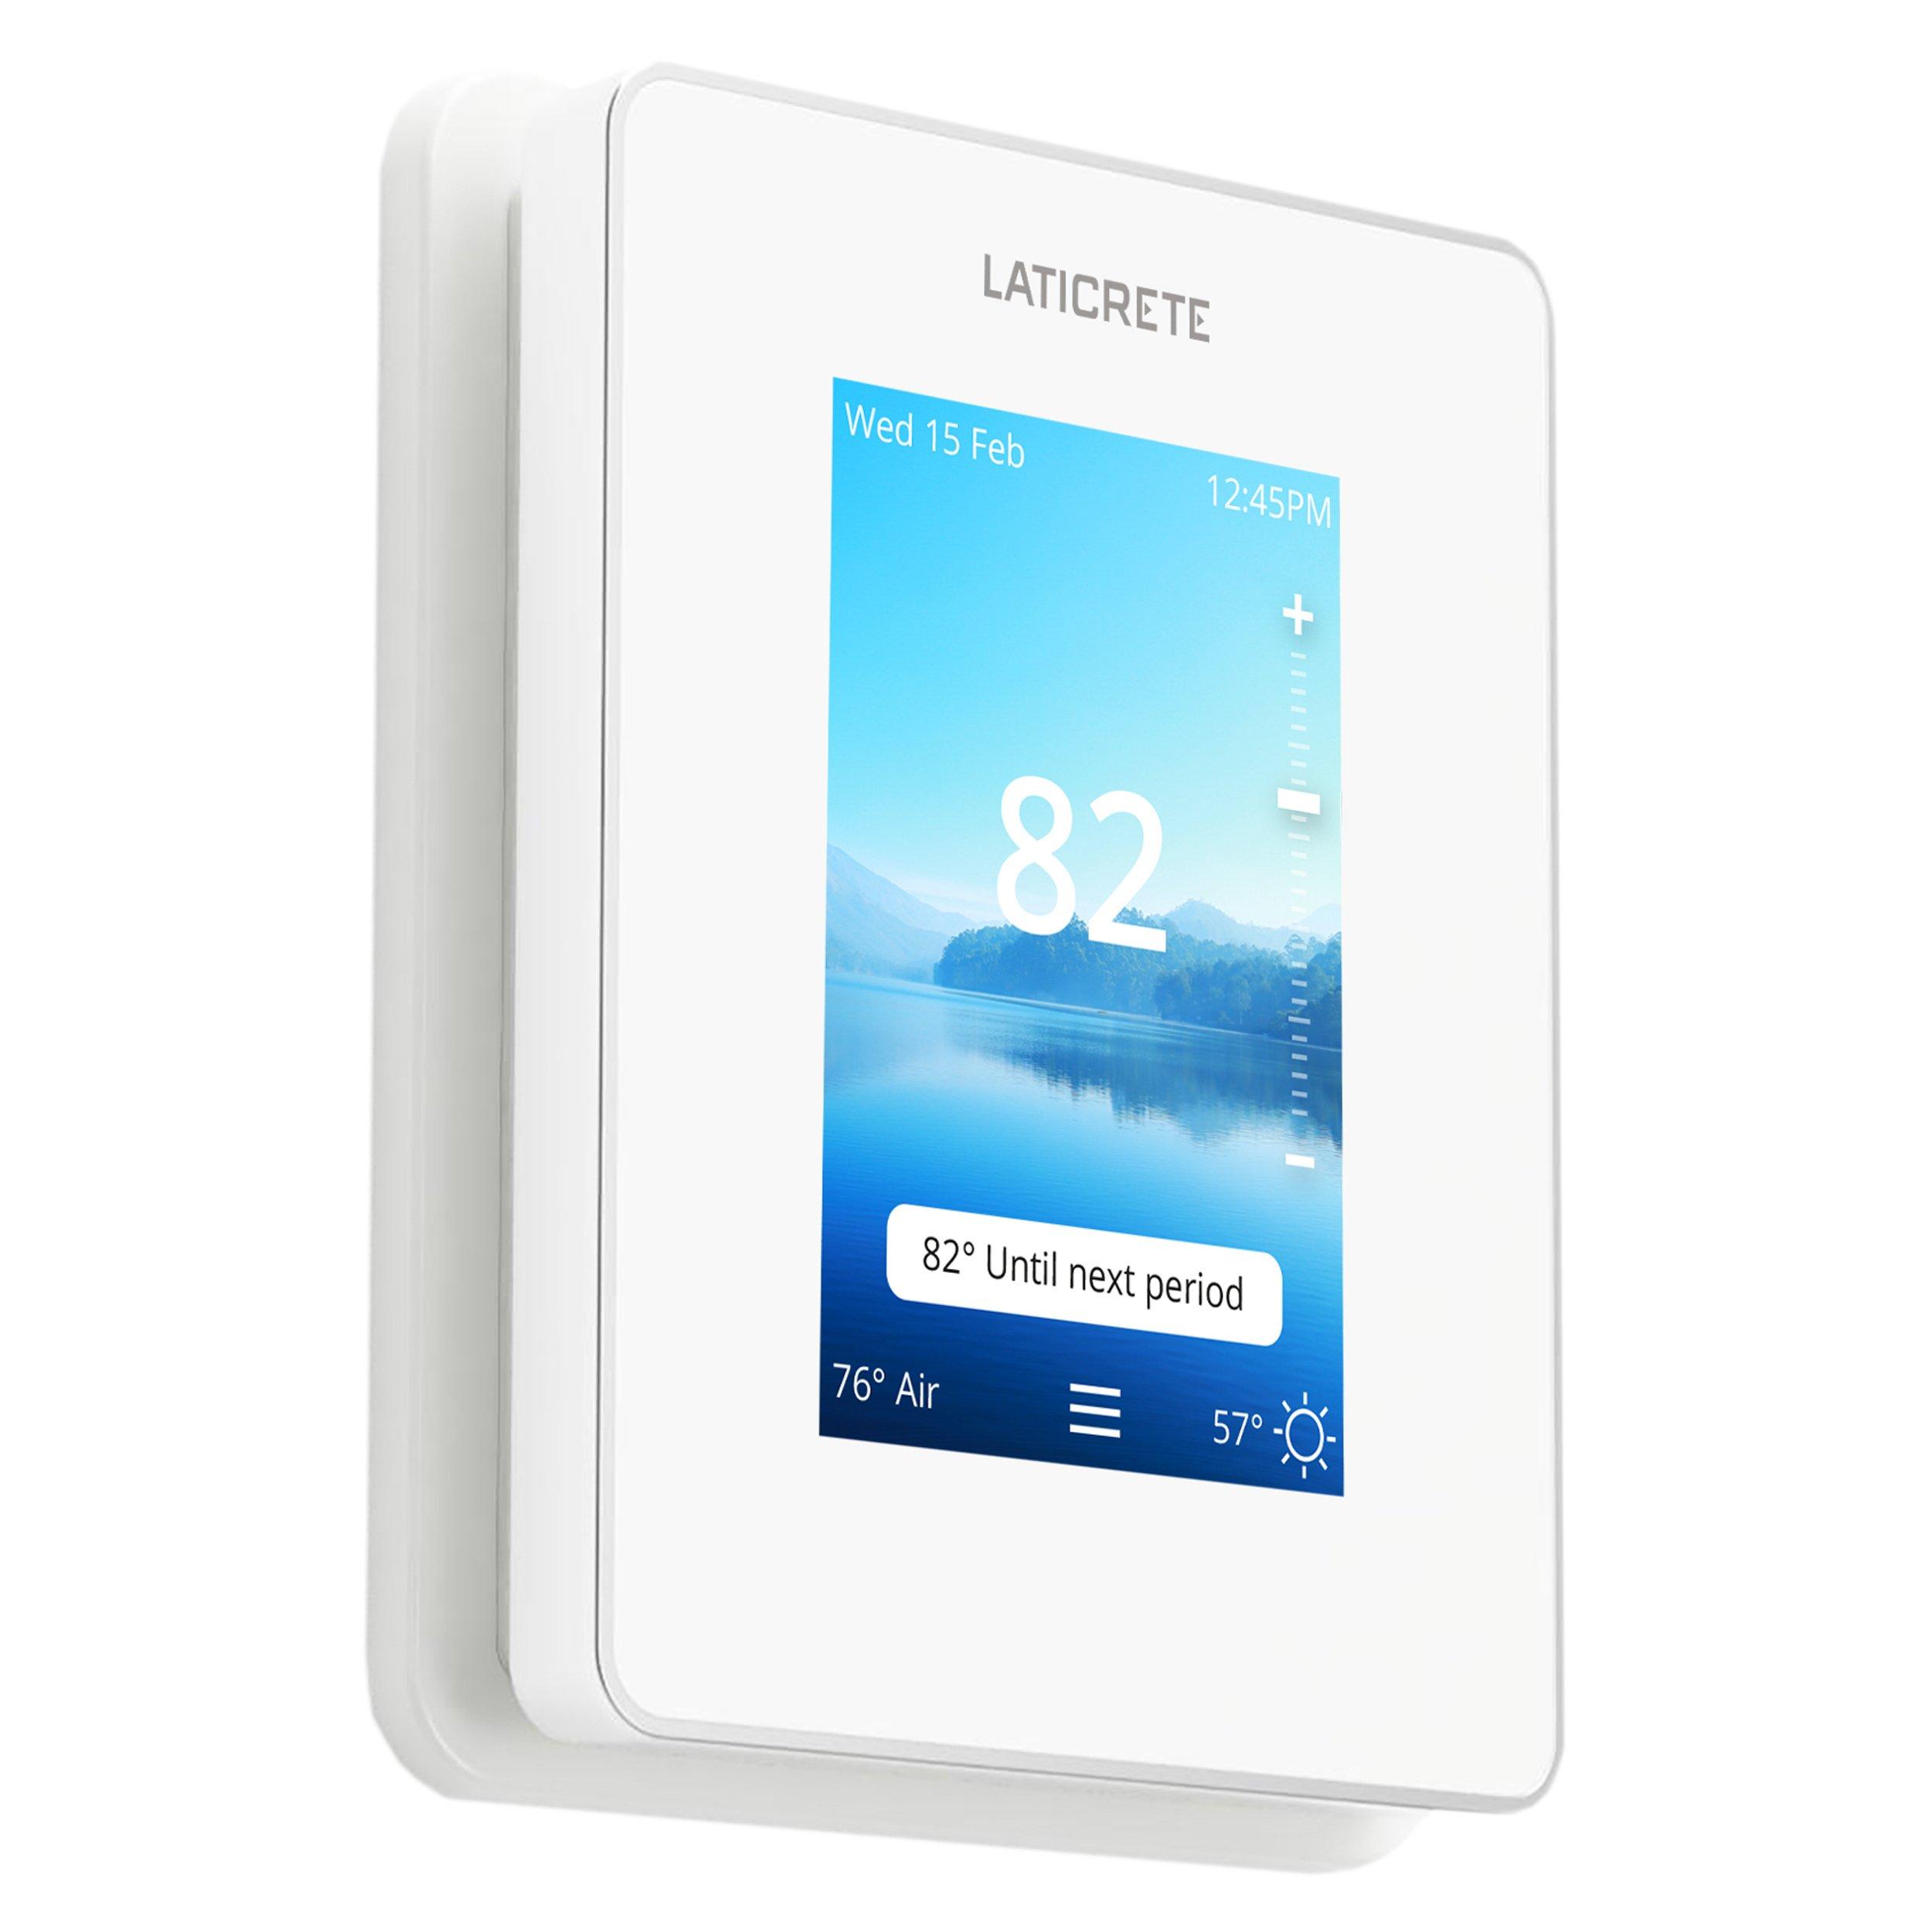 Laticrete Strata Heat Smart Wi-Fi Thermostat